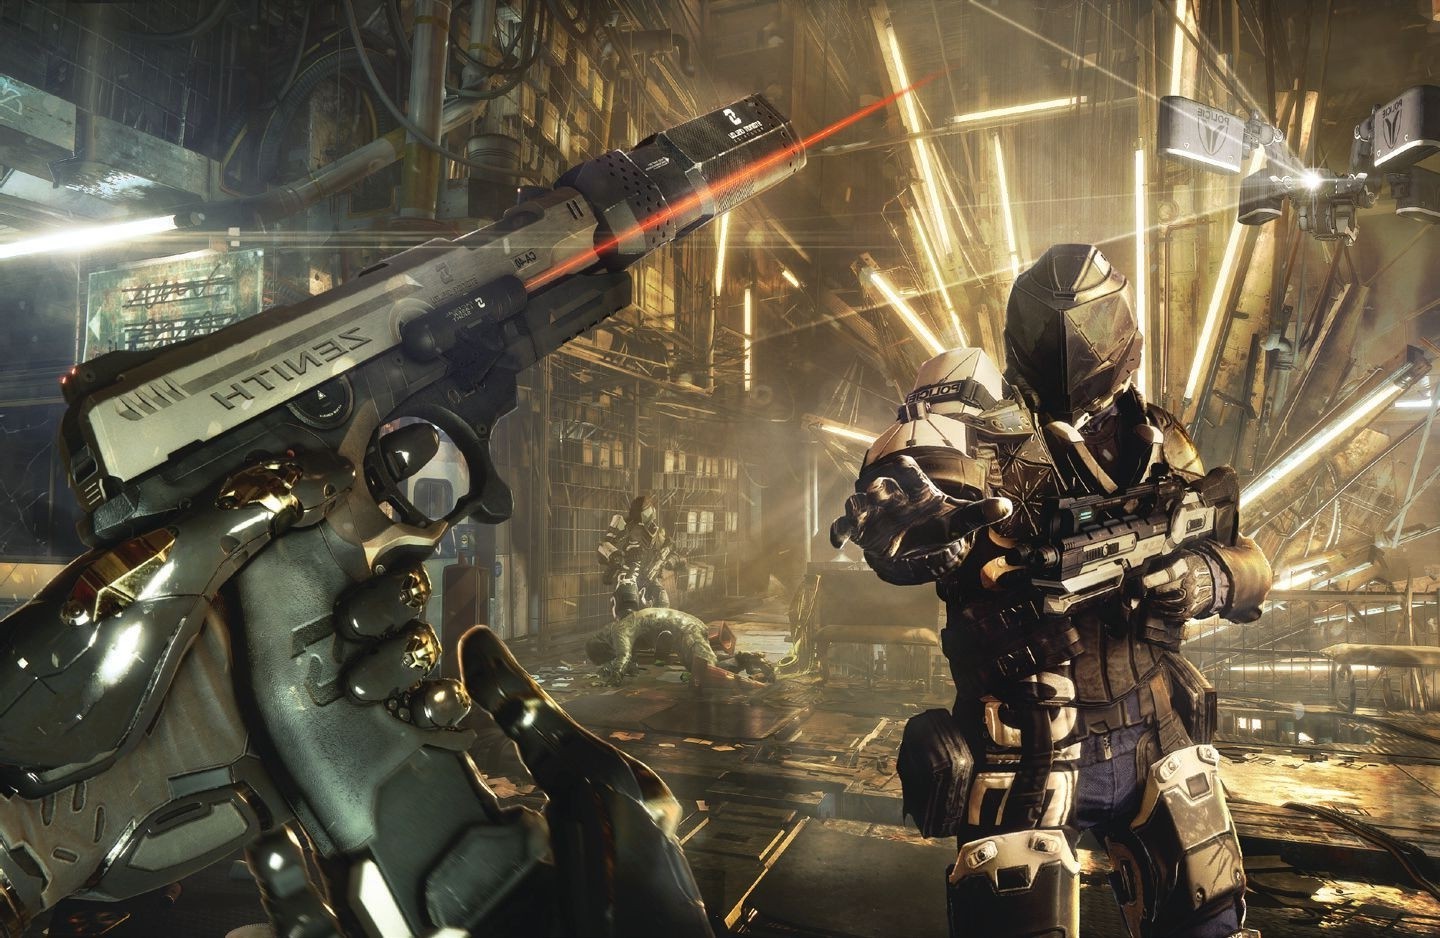 Deus Ex, Weapon, Cyberpunk, Science Fiction, Futuristic, Video Games, Deus Ex: Mankind Divided, Adam Jensen Wallpaper